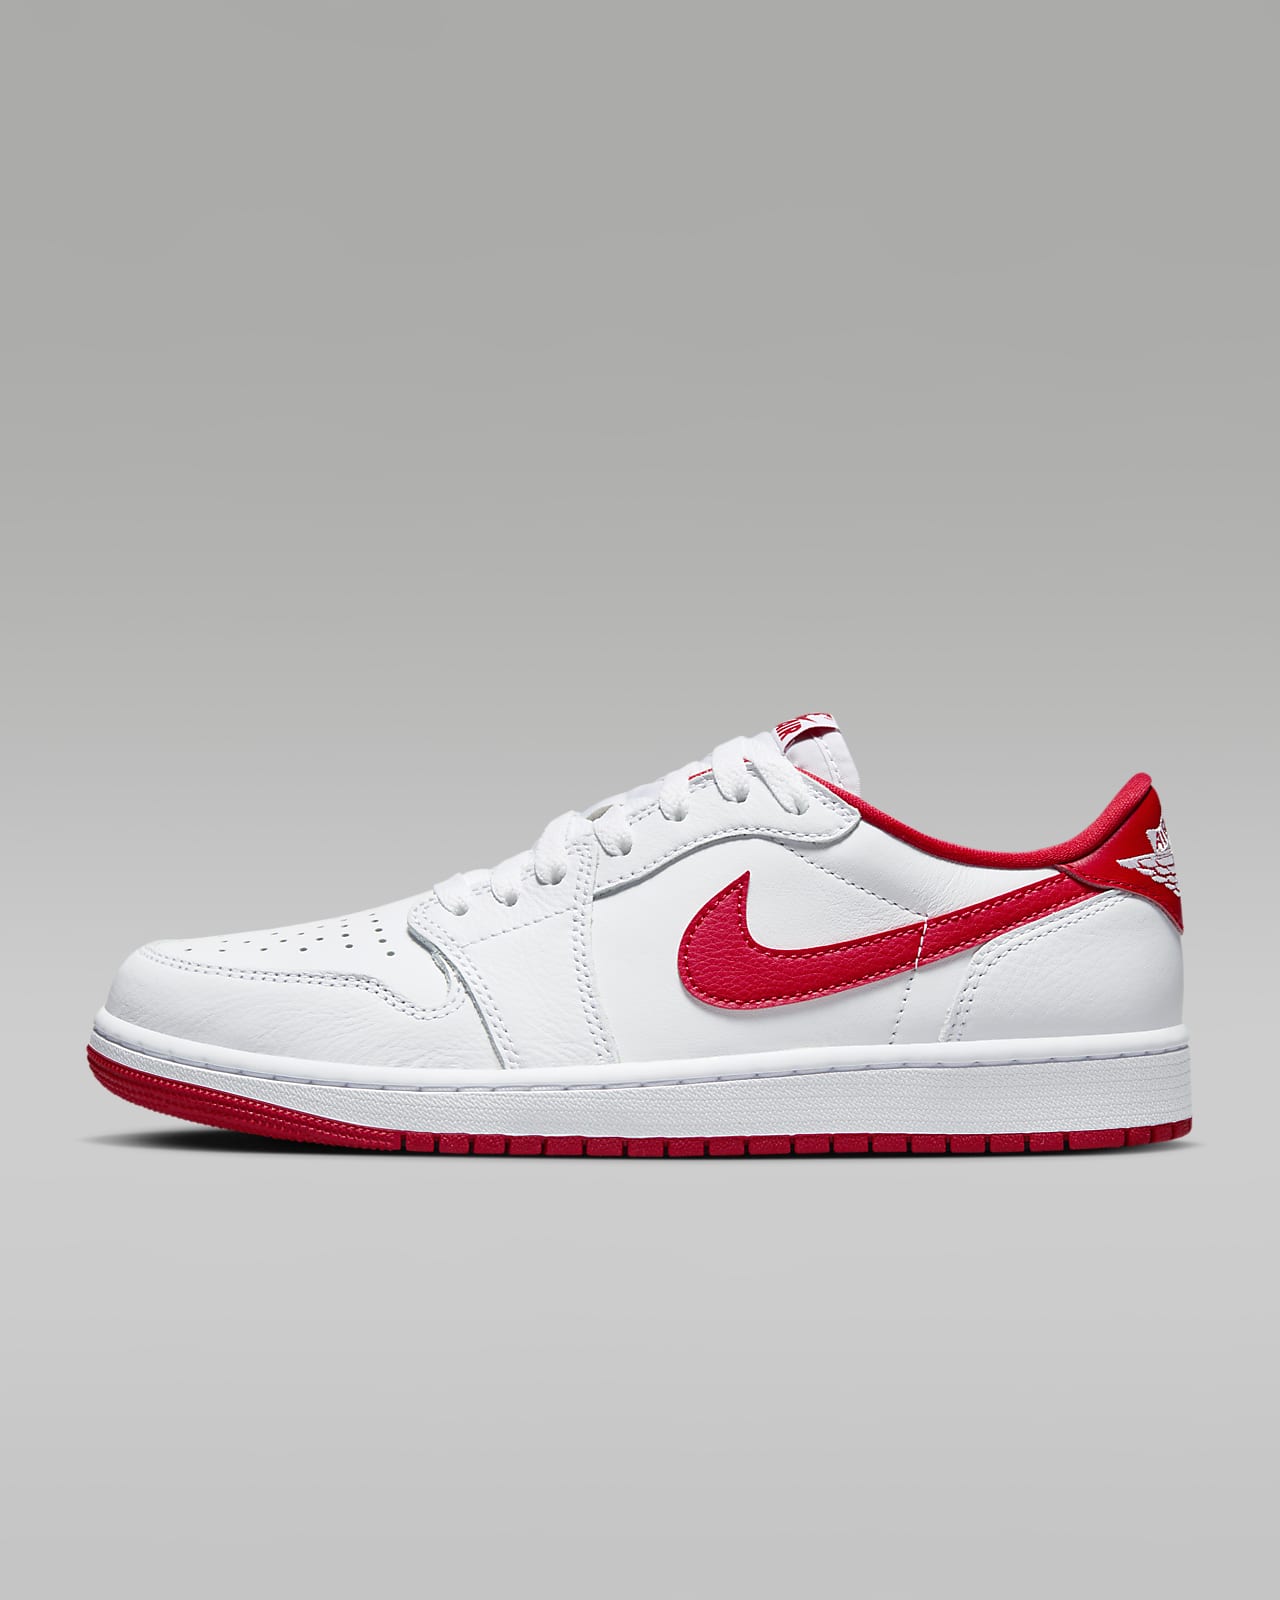 Air Jordan 1 Low OG "White/Red" Erkek Ayakkabısı